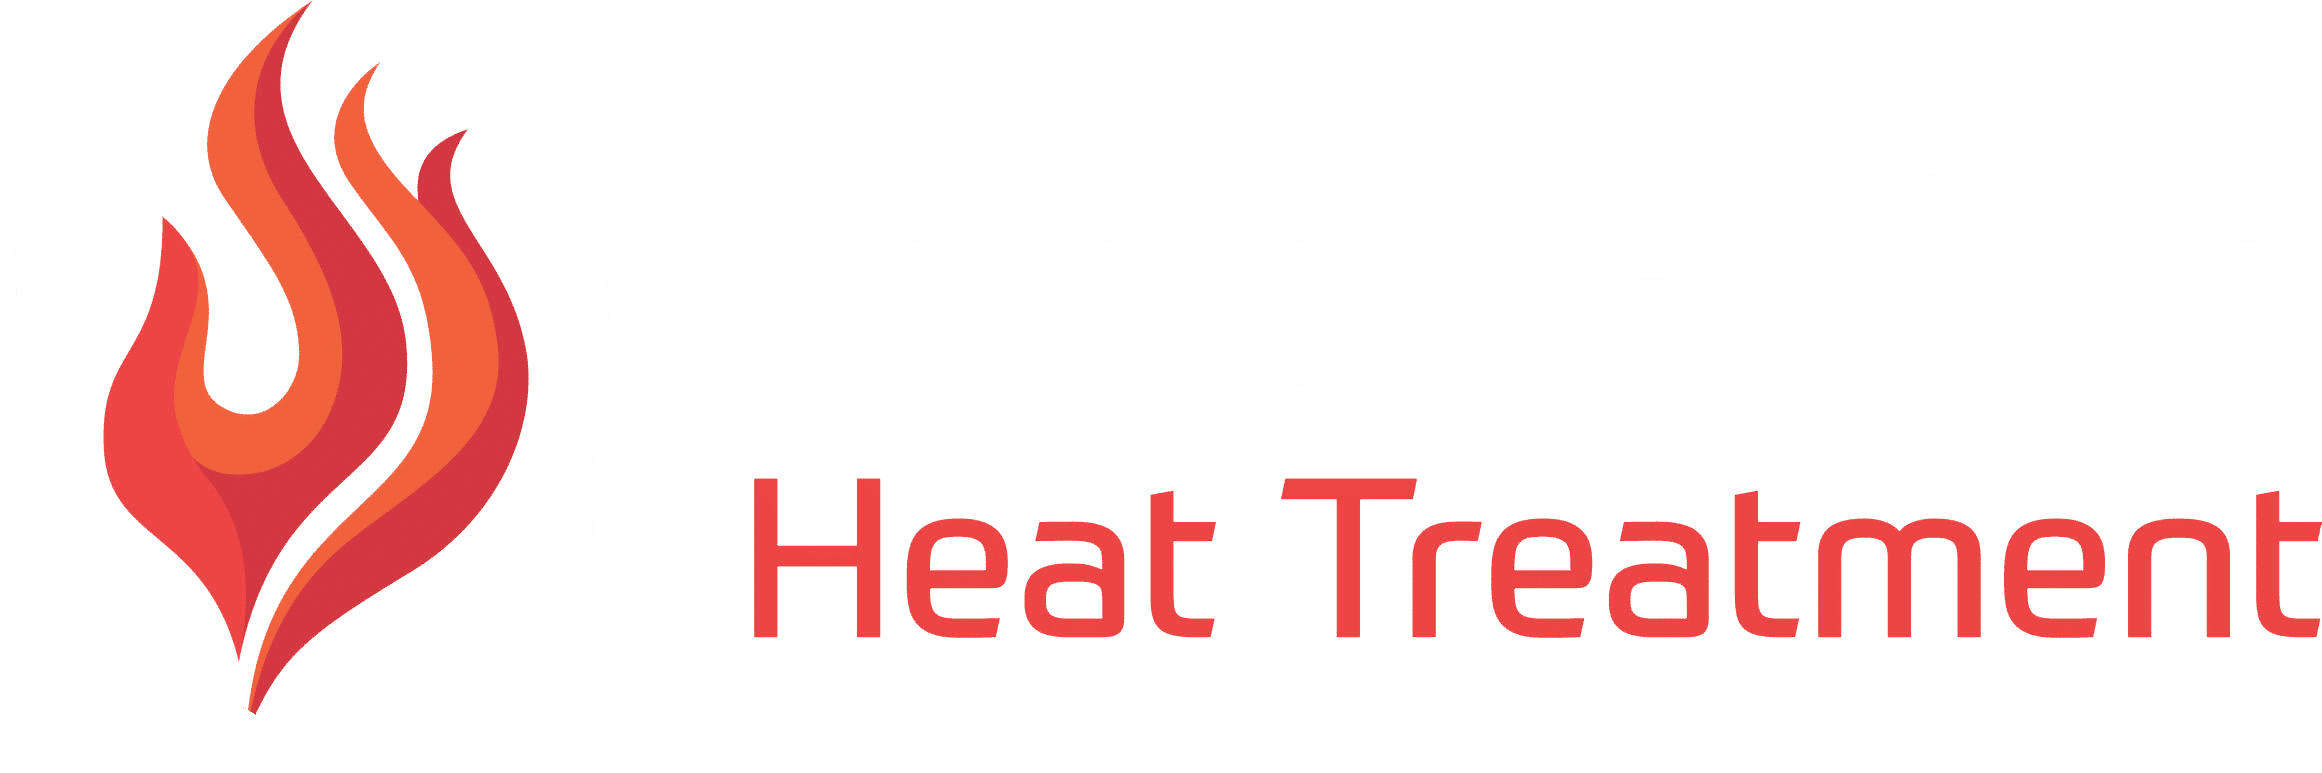 Innovative Heat Treatment